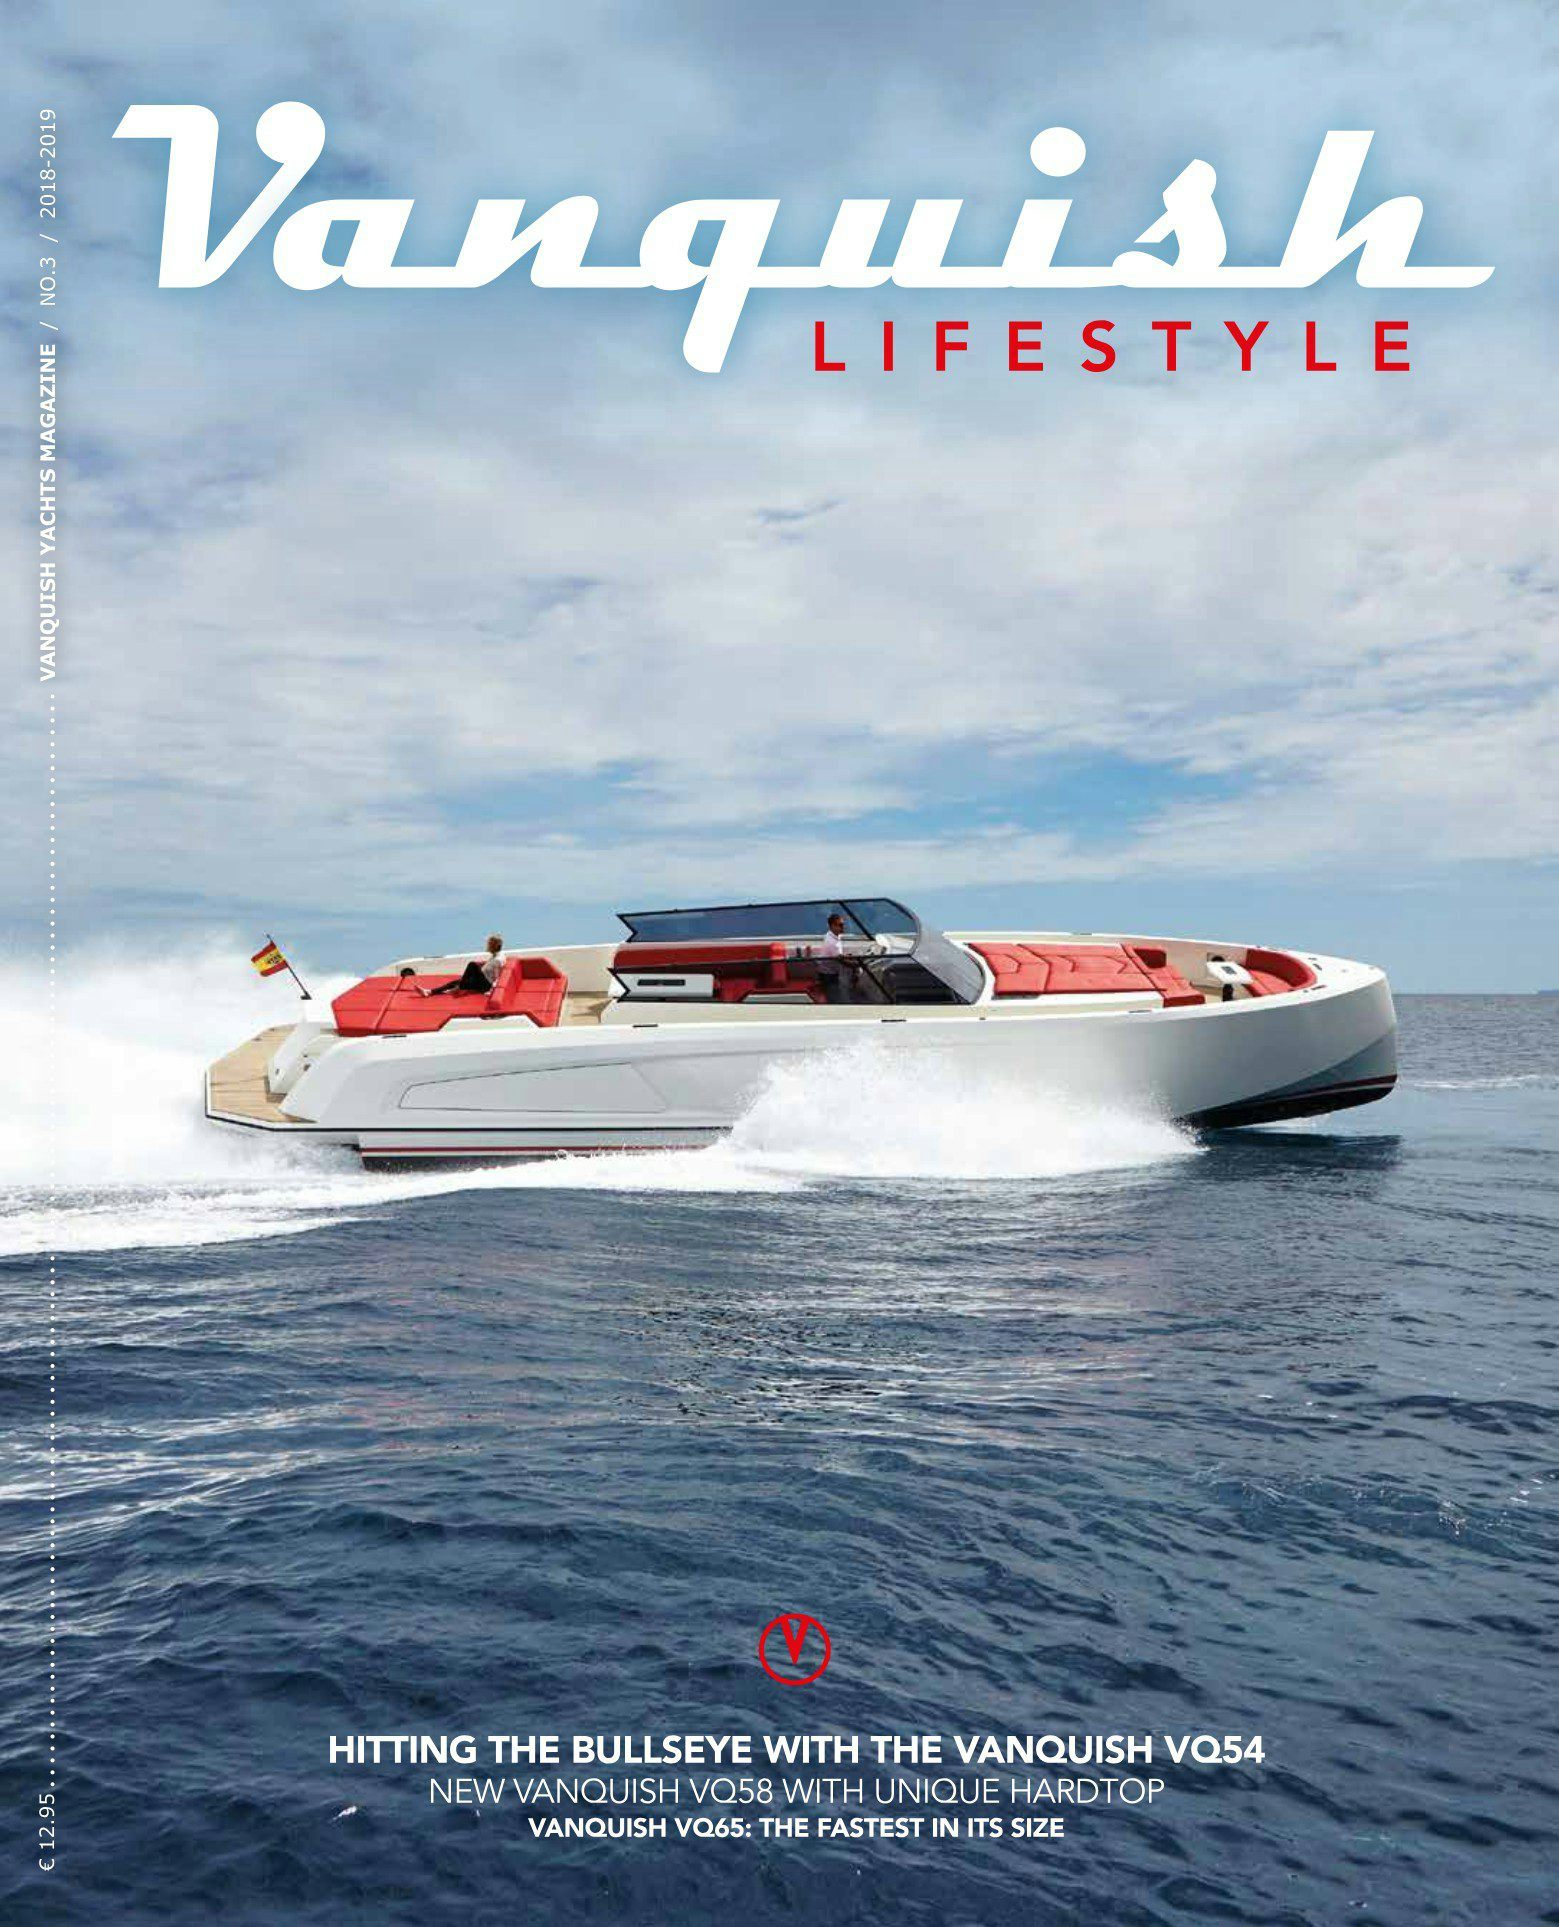 Vanquish lifestyle magazine cover 2018/2019